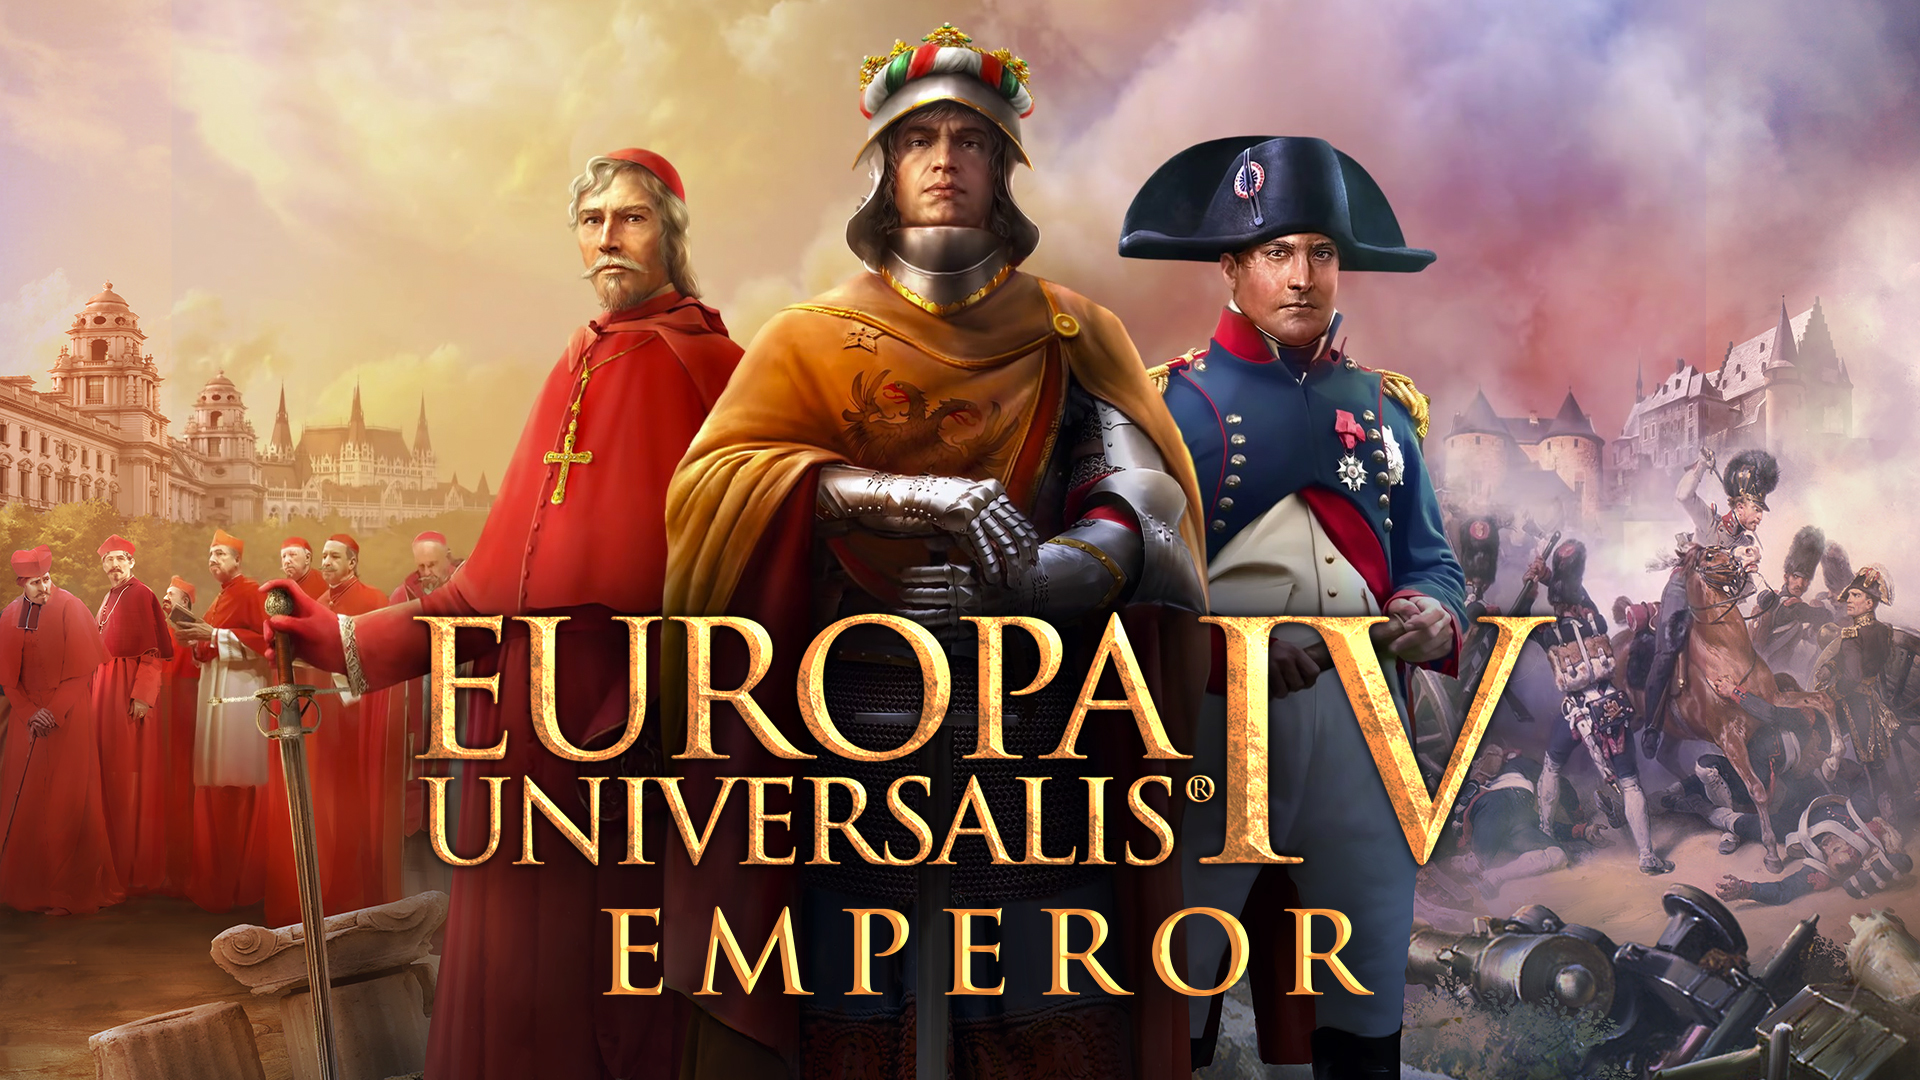 europa universalis 4 free